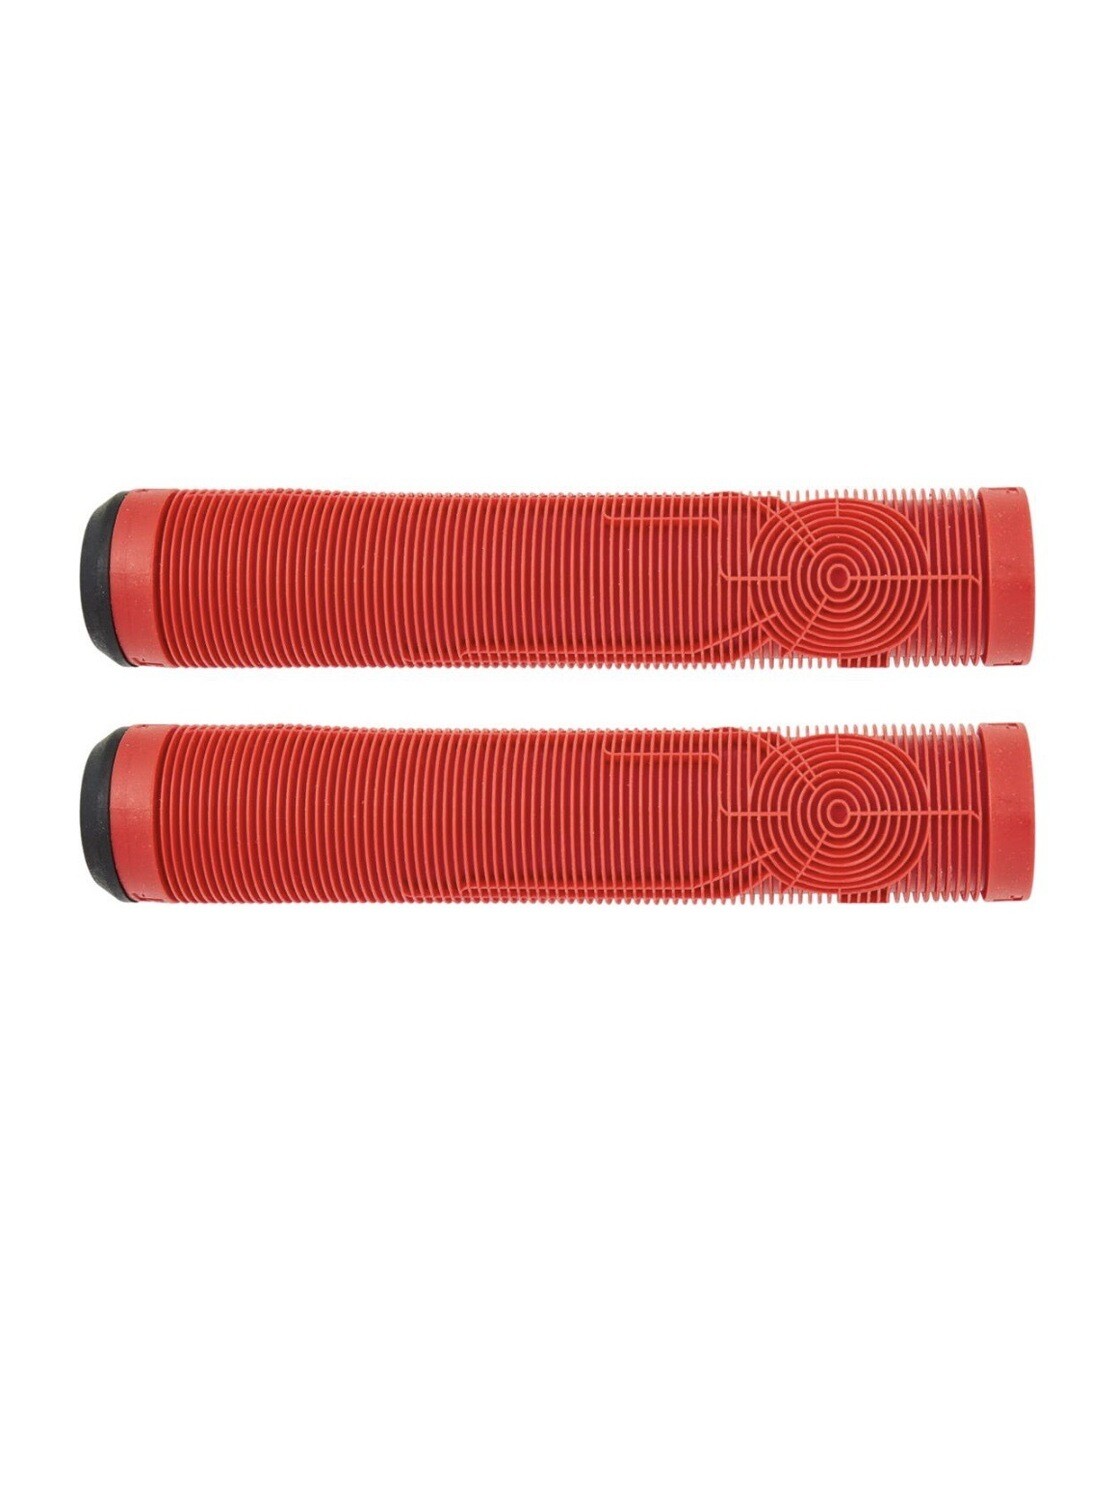 Tilt Metra Pro Scooter Grips
(Color: Red)